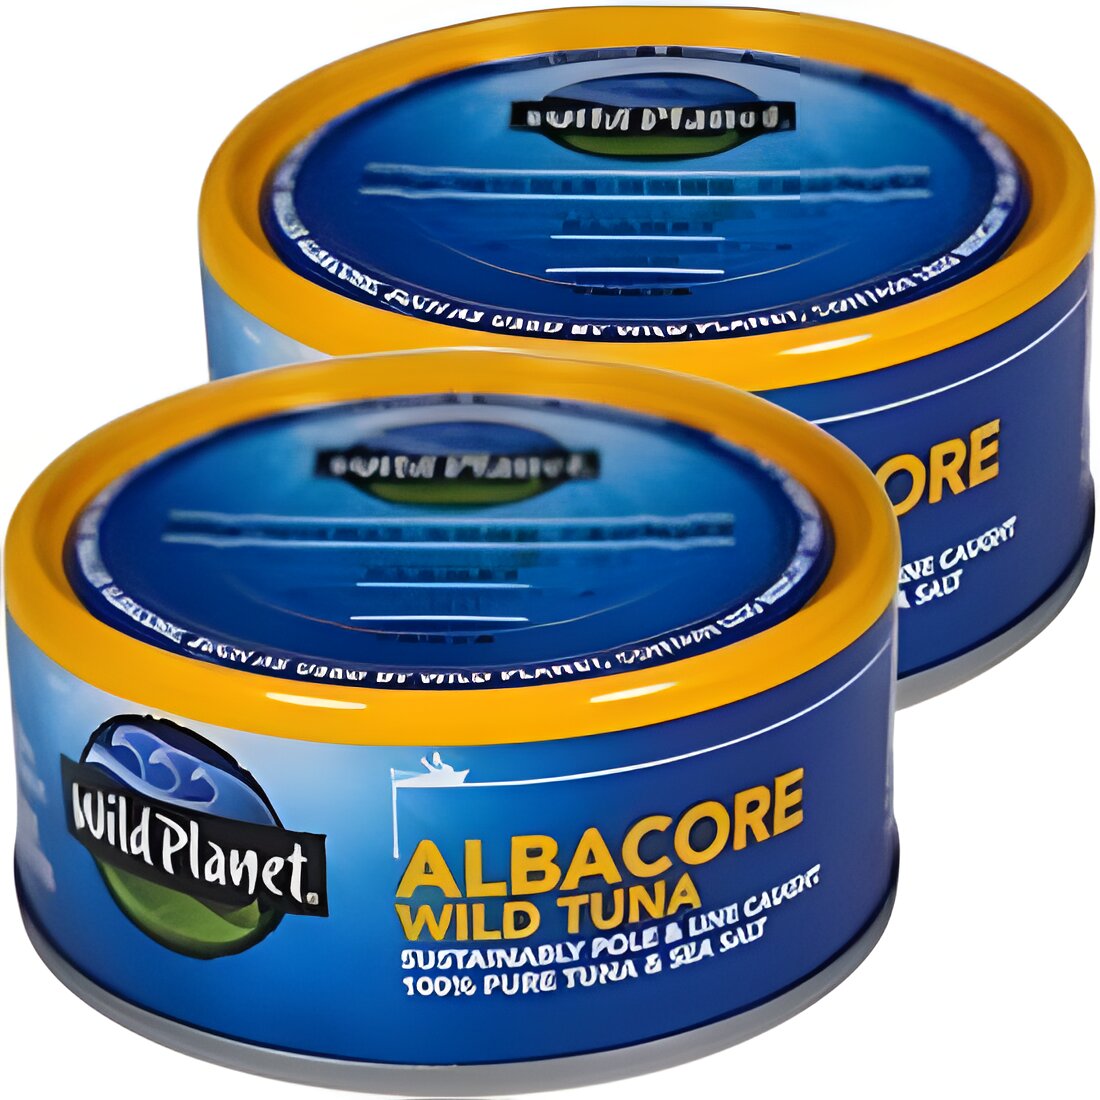 Free Wild Planet Albacore Wild Tuna